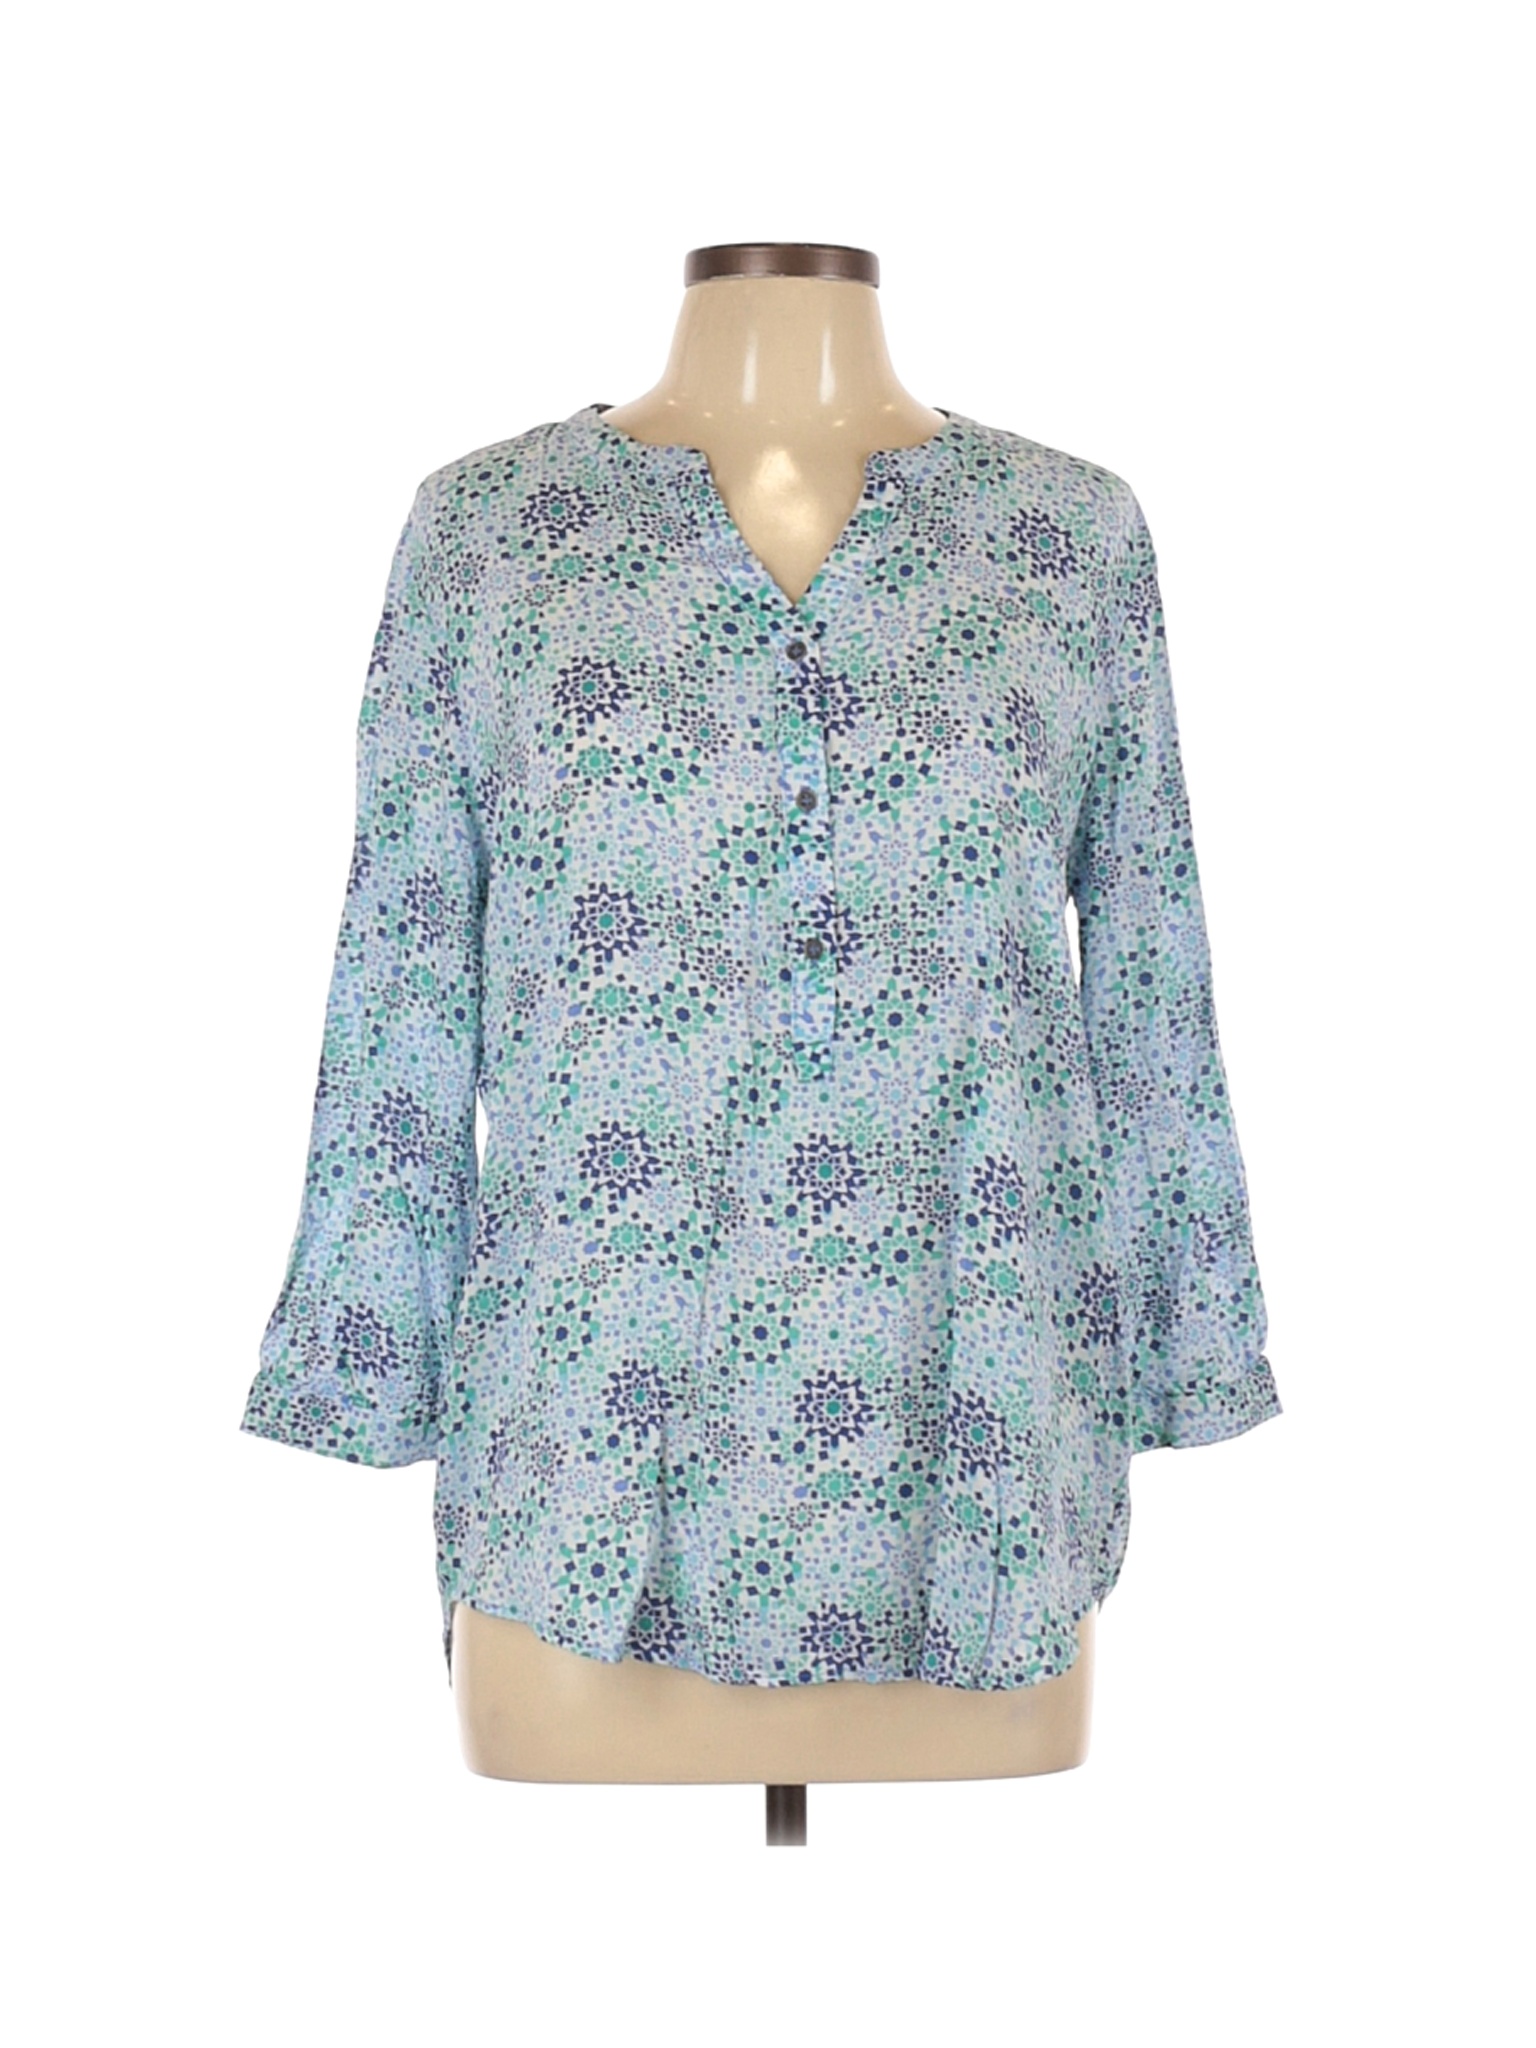 Grand & greene Women Blue Long Sleeve Blouse L | eBay